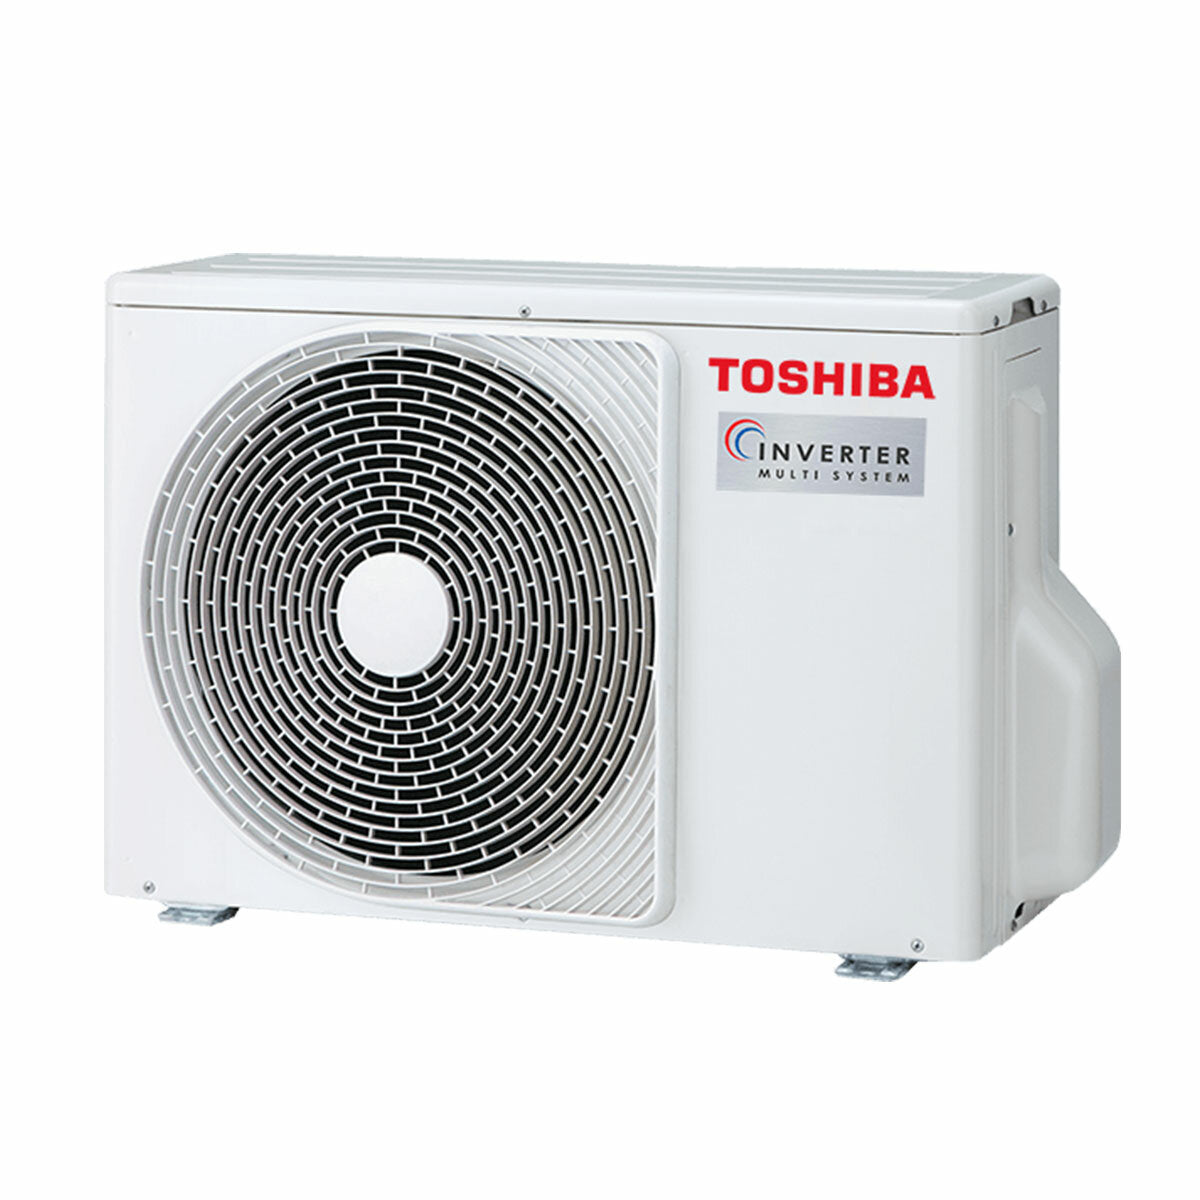 Toshiba ducted air conditioner U2 trial split 7000+7000+16000 BTU inverter A+++ external unit 7 kW